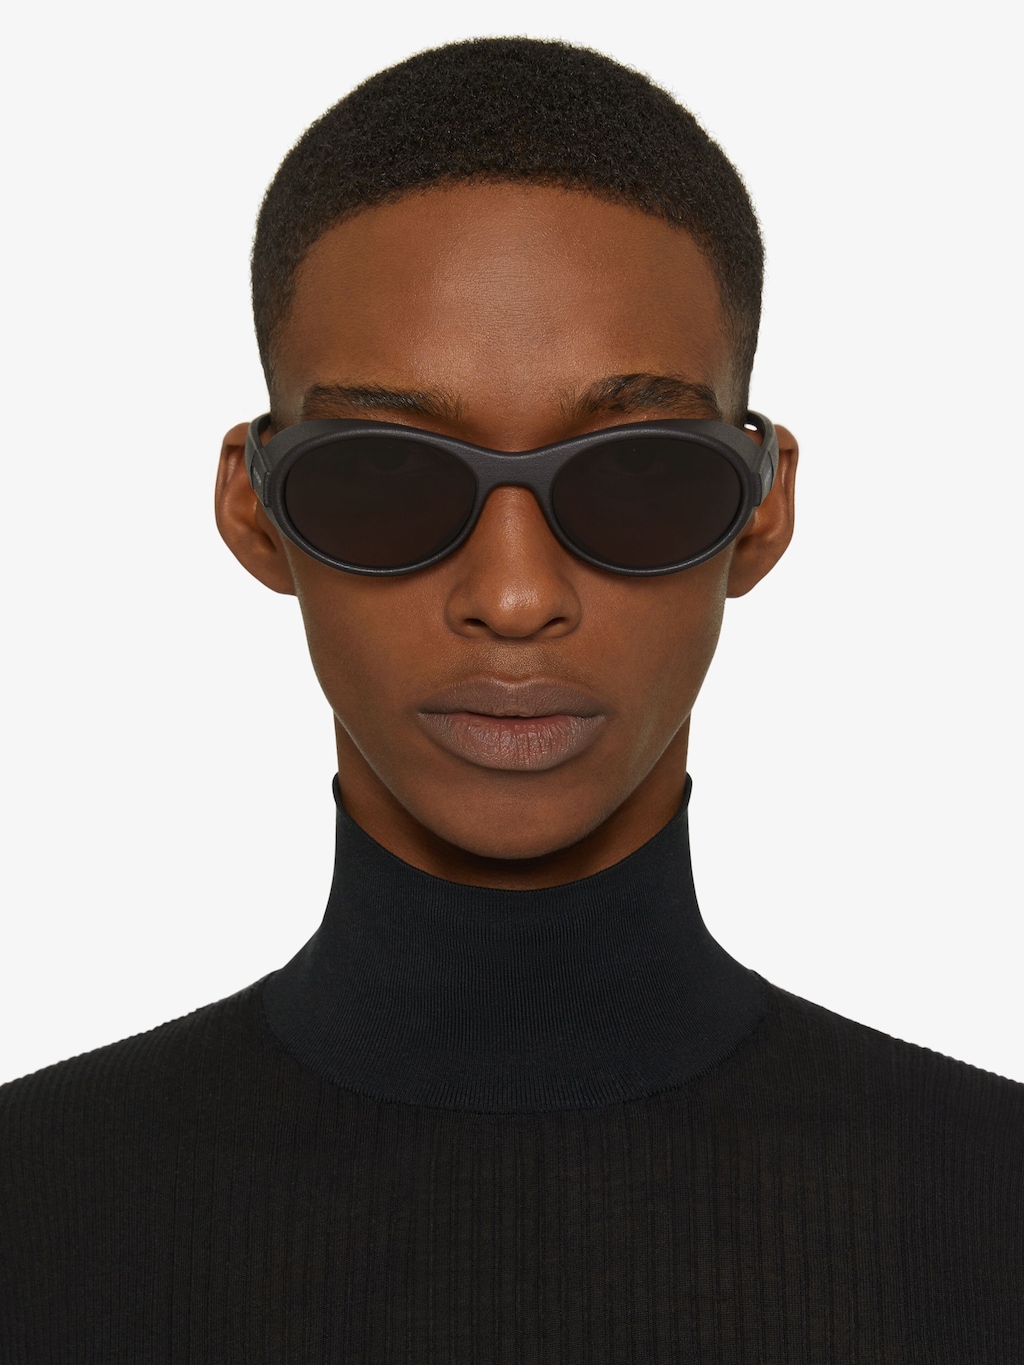 G Ride sunglasses in nylon | Givenchy US | Givenchy